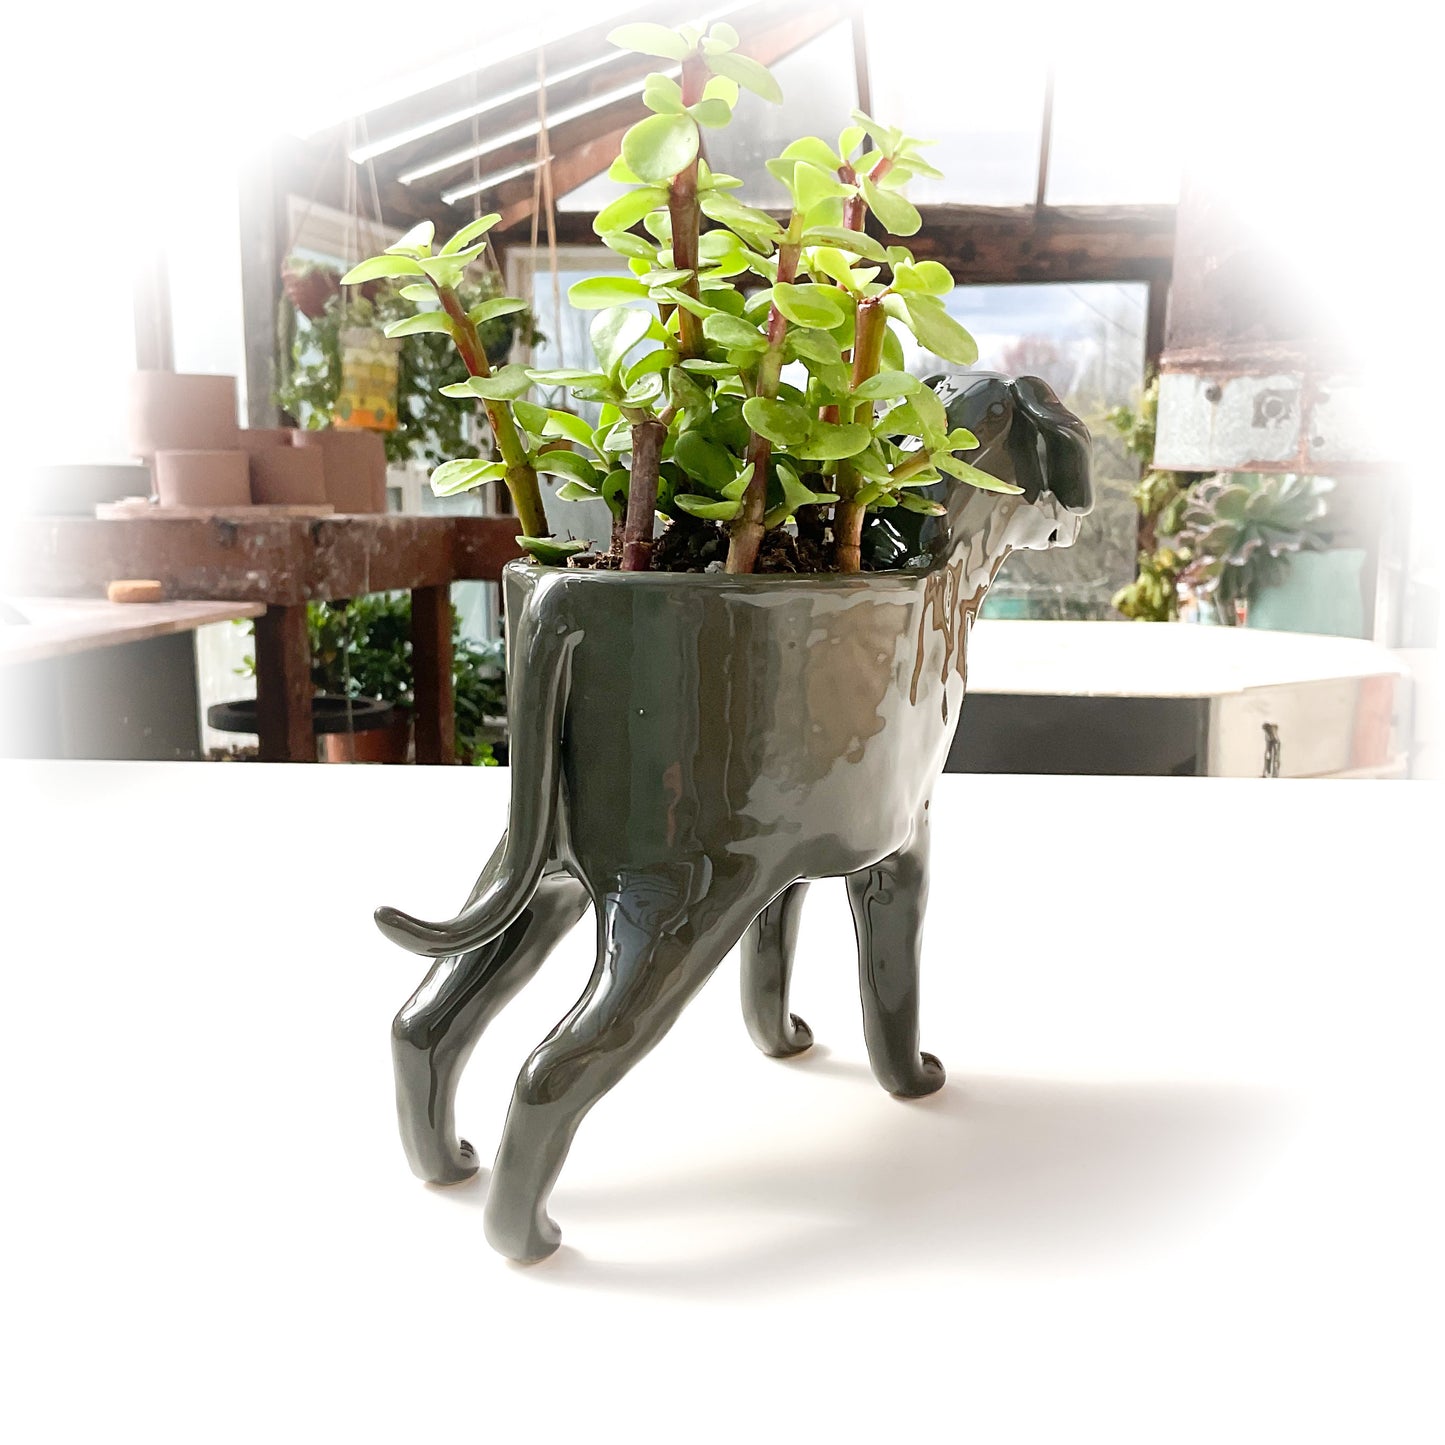 Great Dane Dog Planter - Ceramic Dog Plant Pot